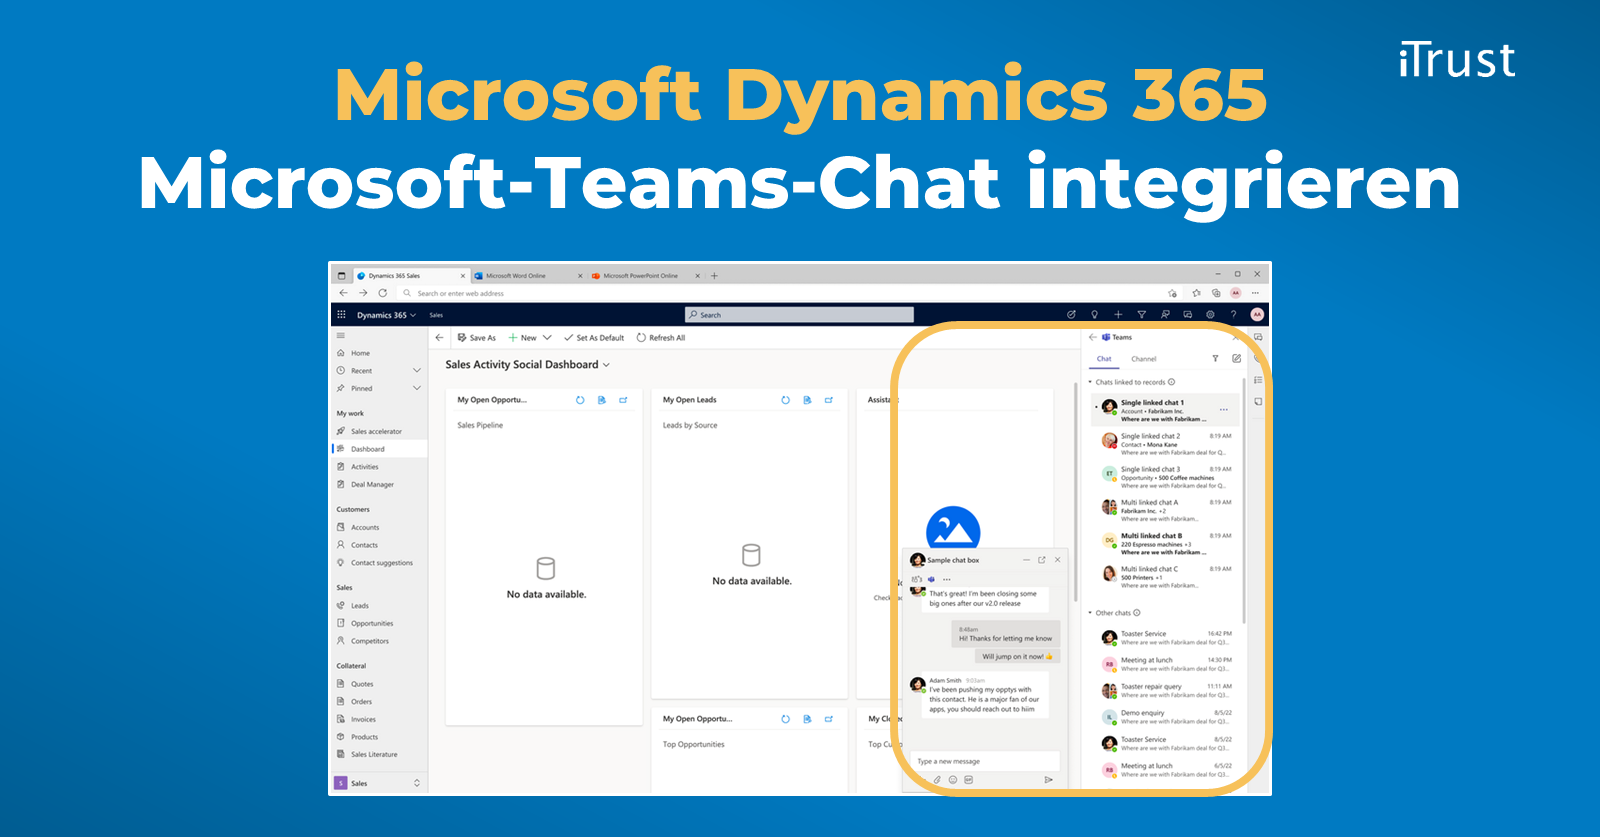 Microsoft-Teams-Chat in Microsoft Dynamics 365